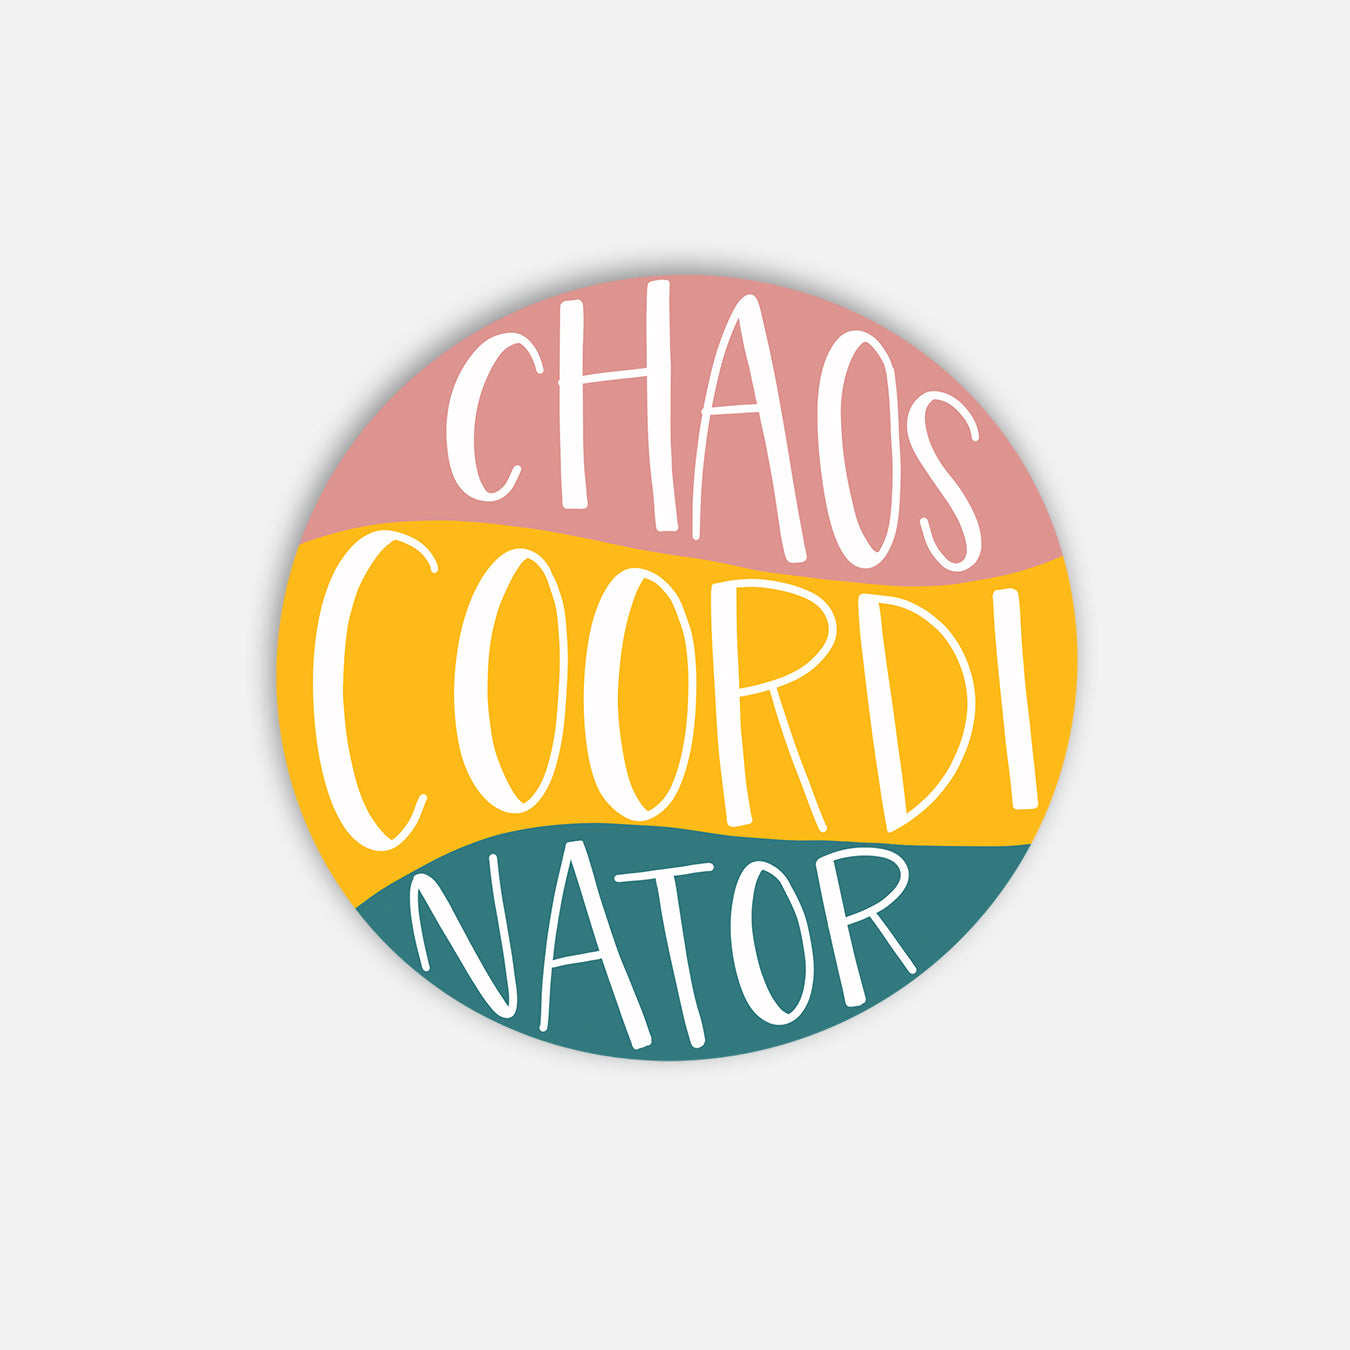 Chaos Coordinator Vinyl Sticker